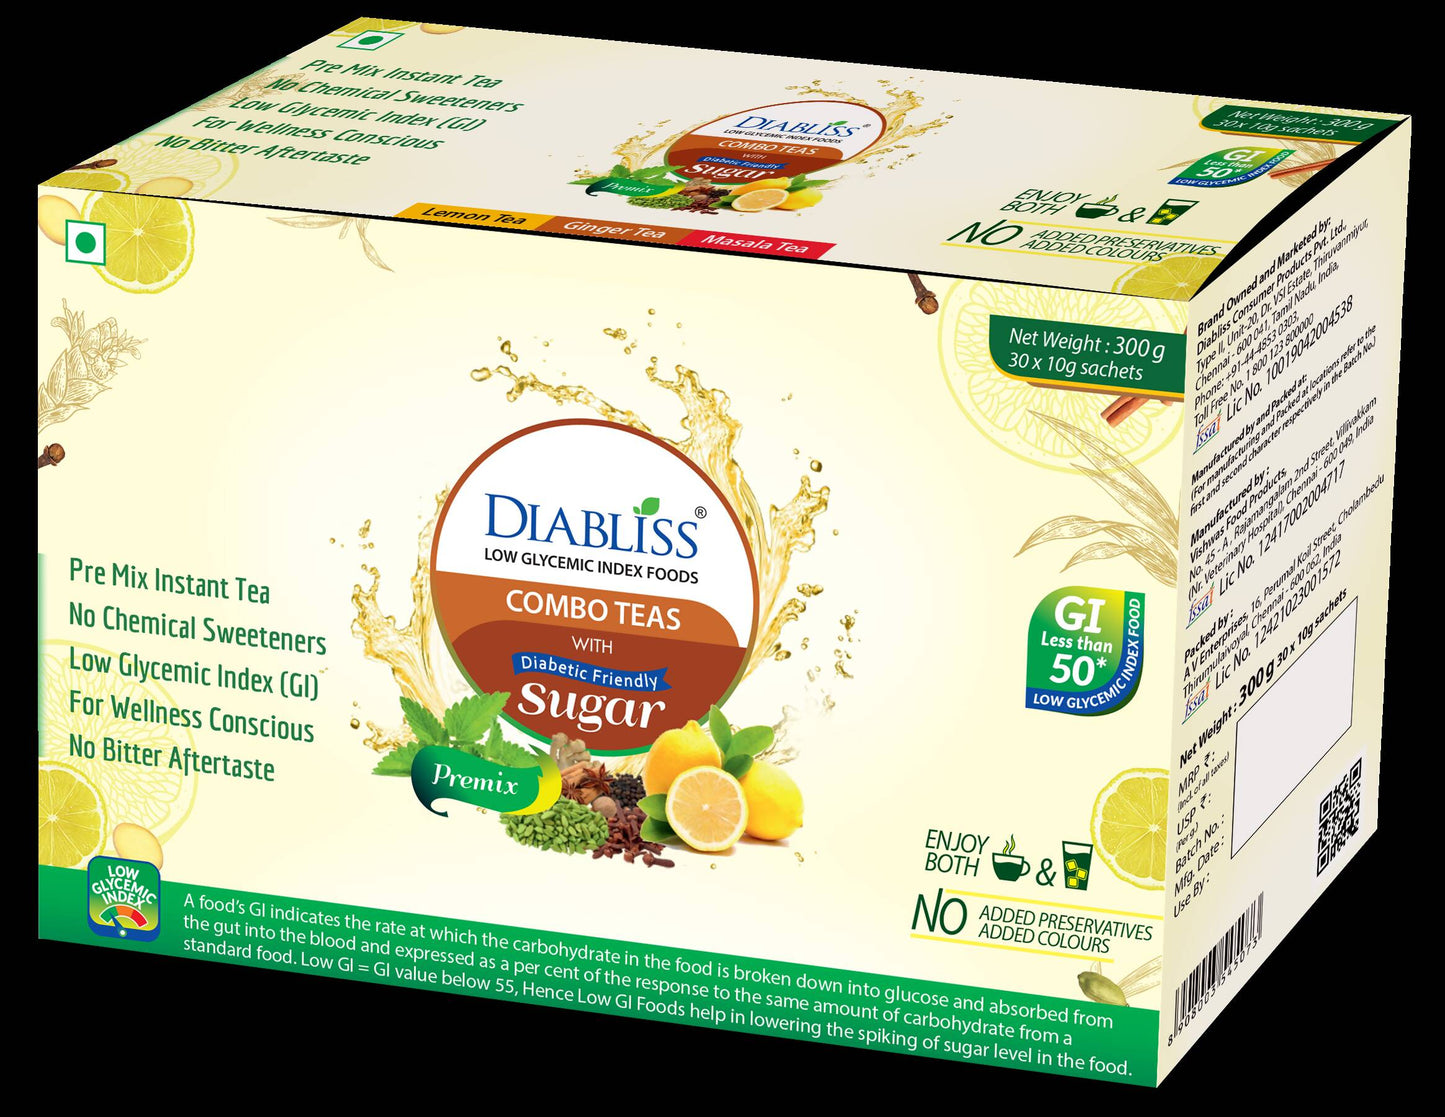 Diabliss Combo Teas with Diabetic Friendly Sugar